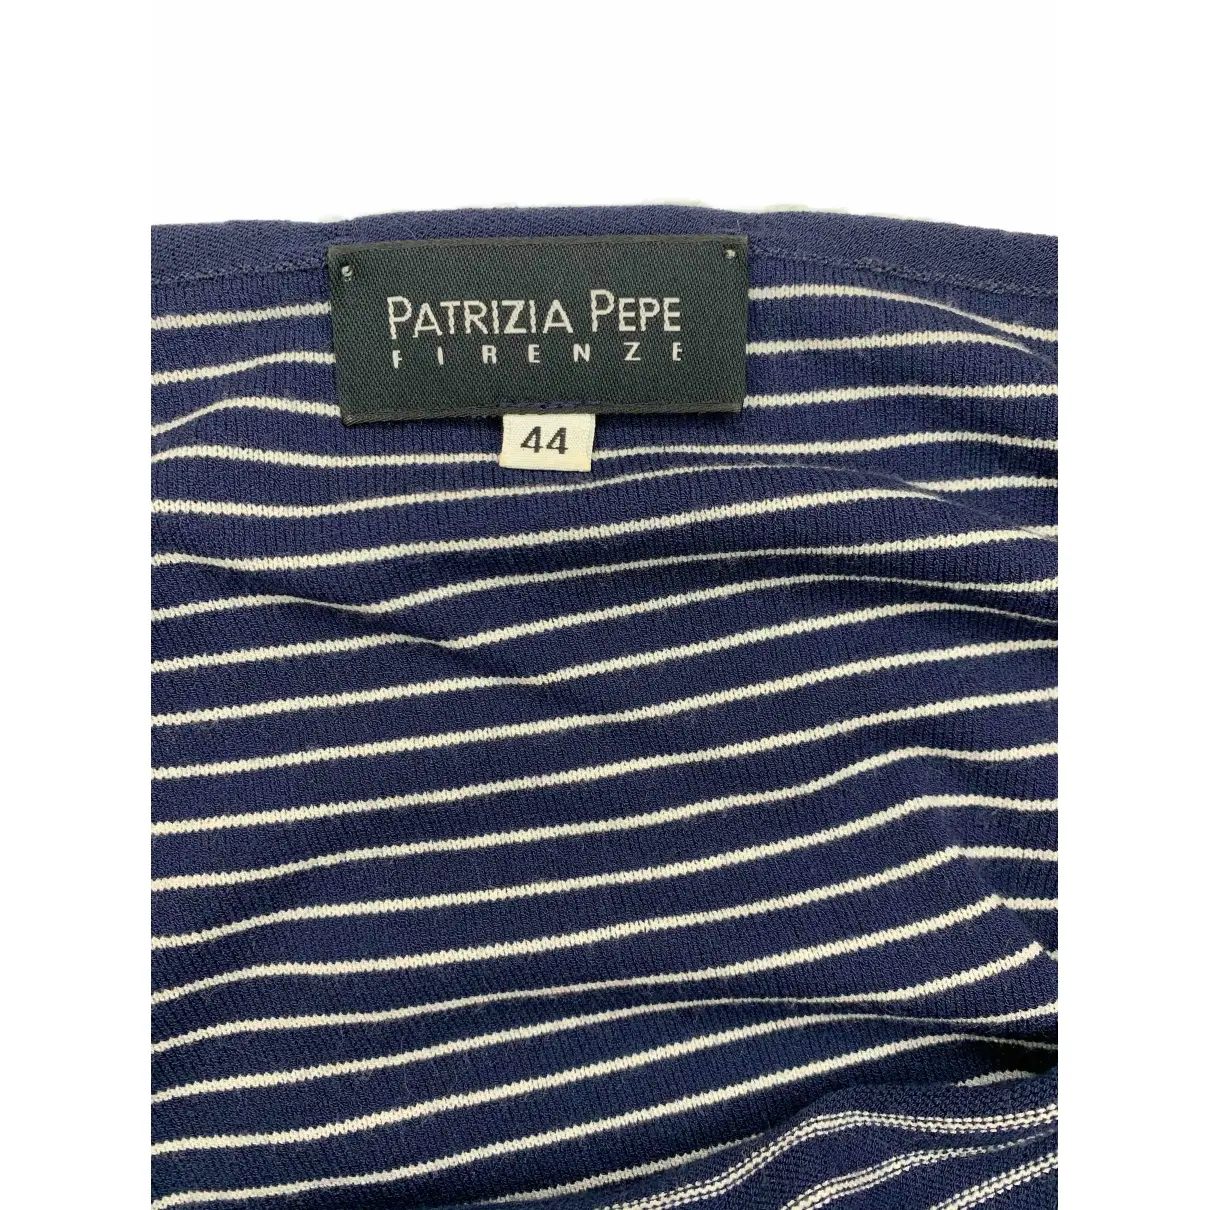 Buy Patrizia Pepe T-shirt online